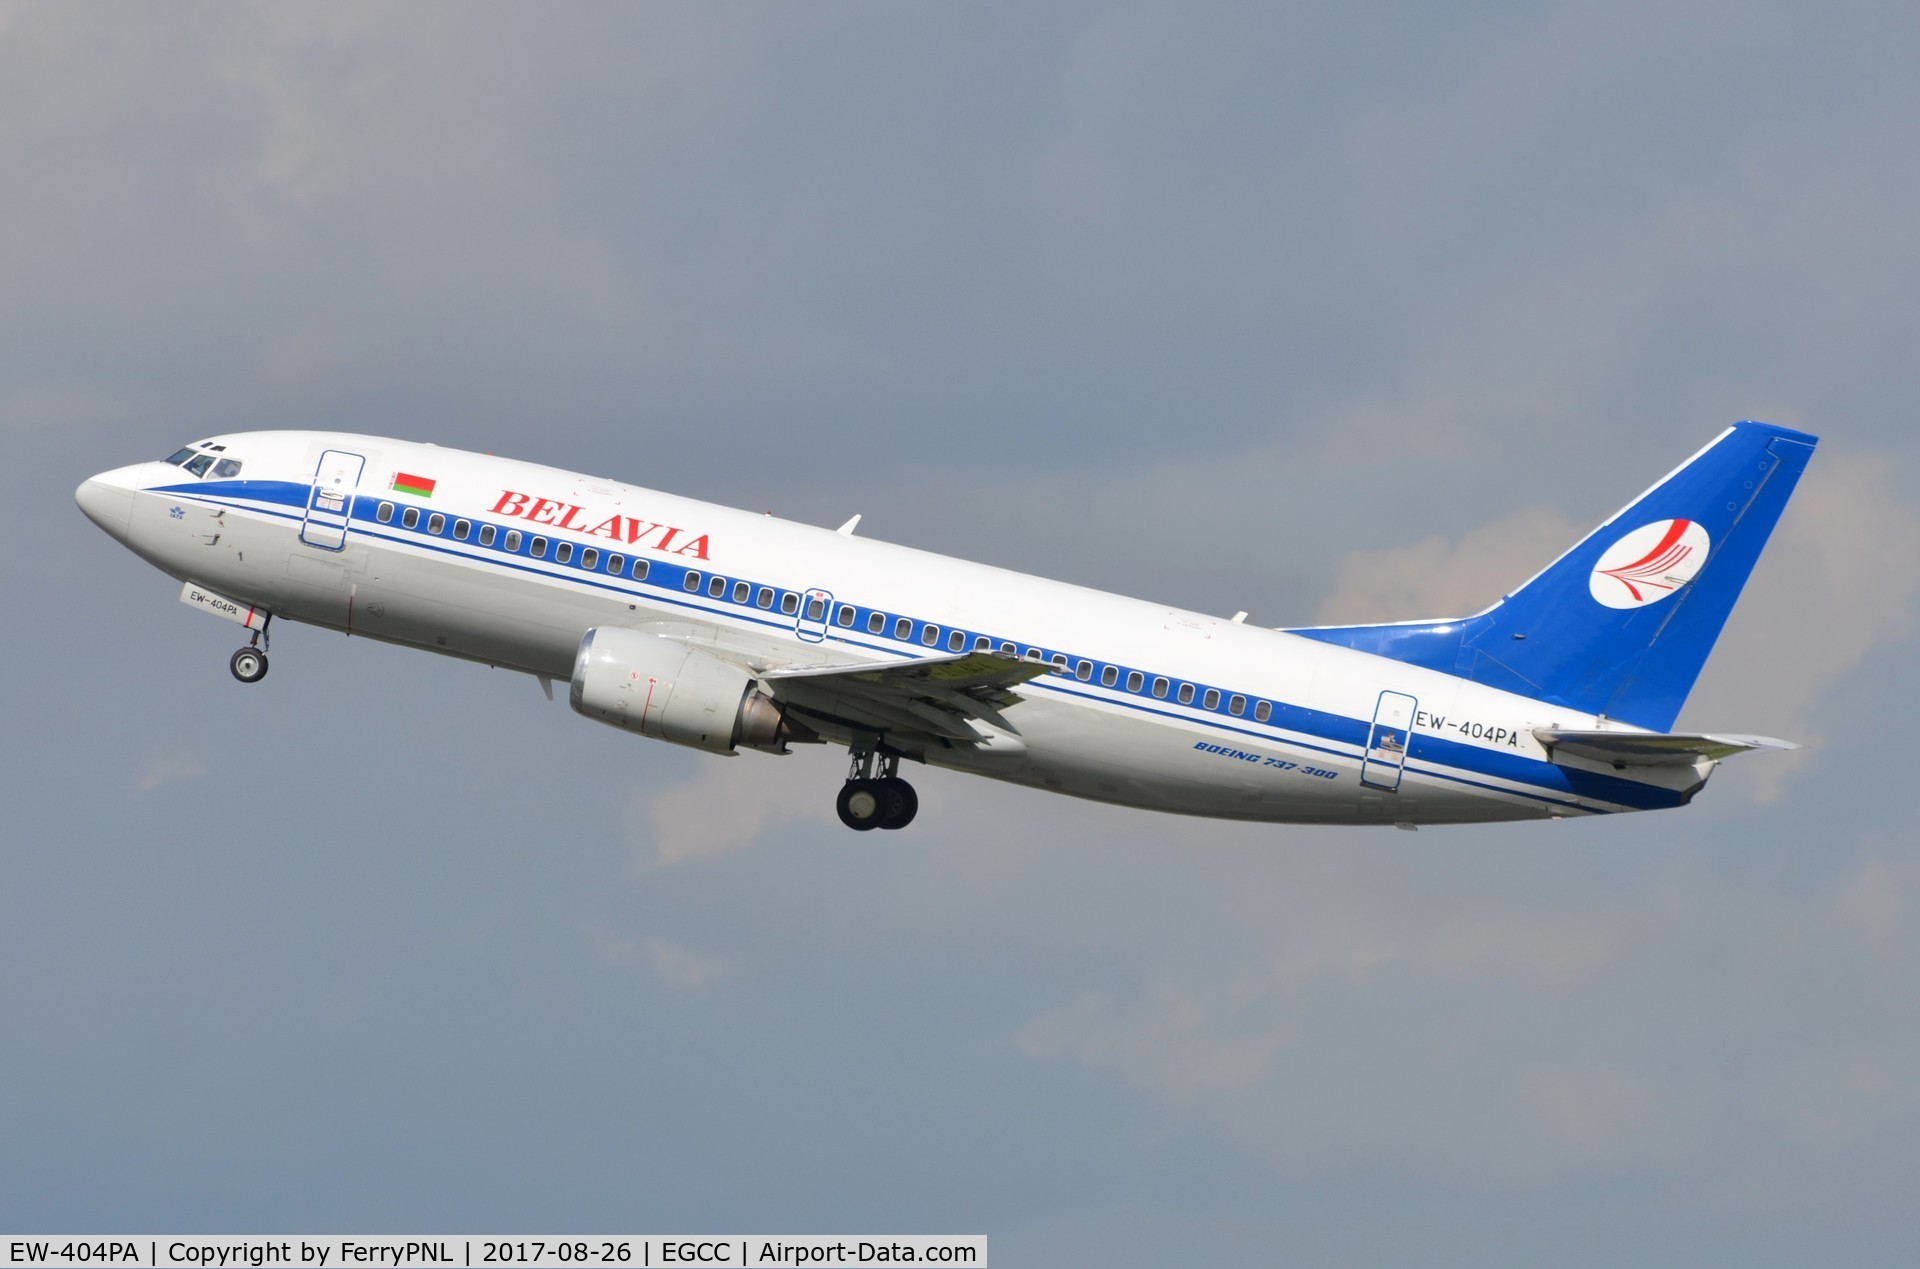 EW-404PA, 1992 Boeing 737-3L9 C/N 27061, Belavia B733 departing for Minsk.